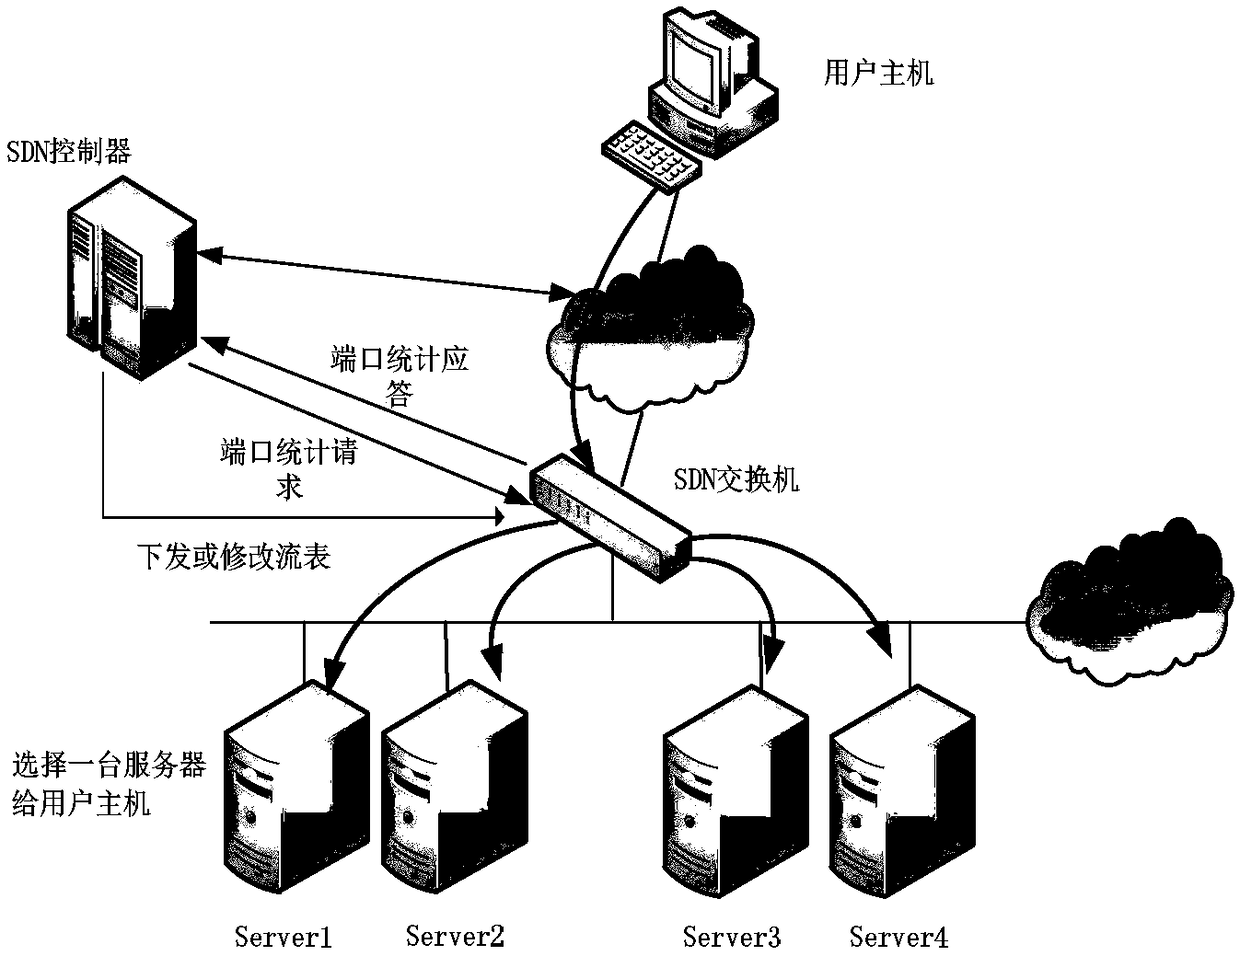 A server load balancing method for software-defined network